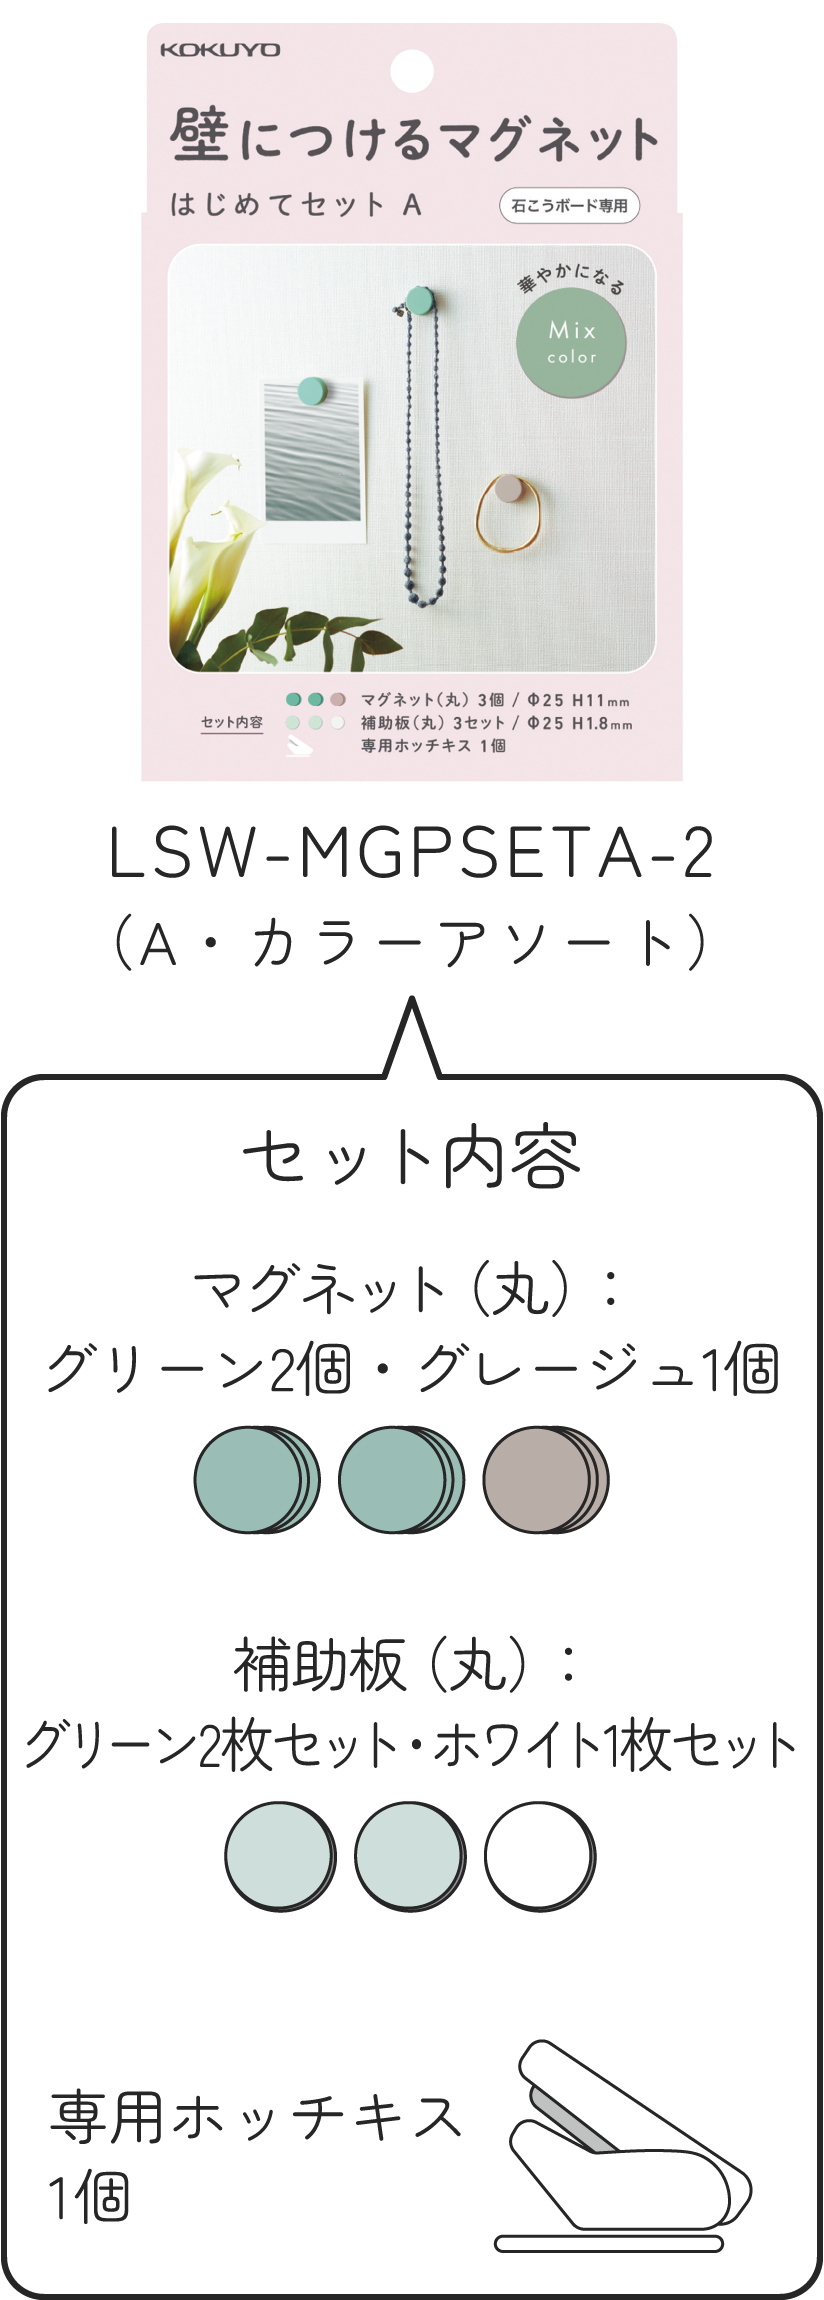 LSW-MGPSETA-2 (A, color assortment)